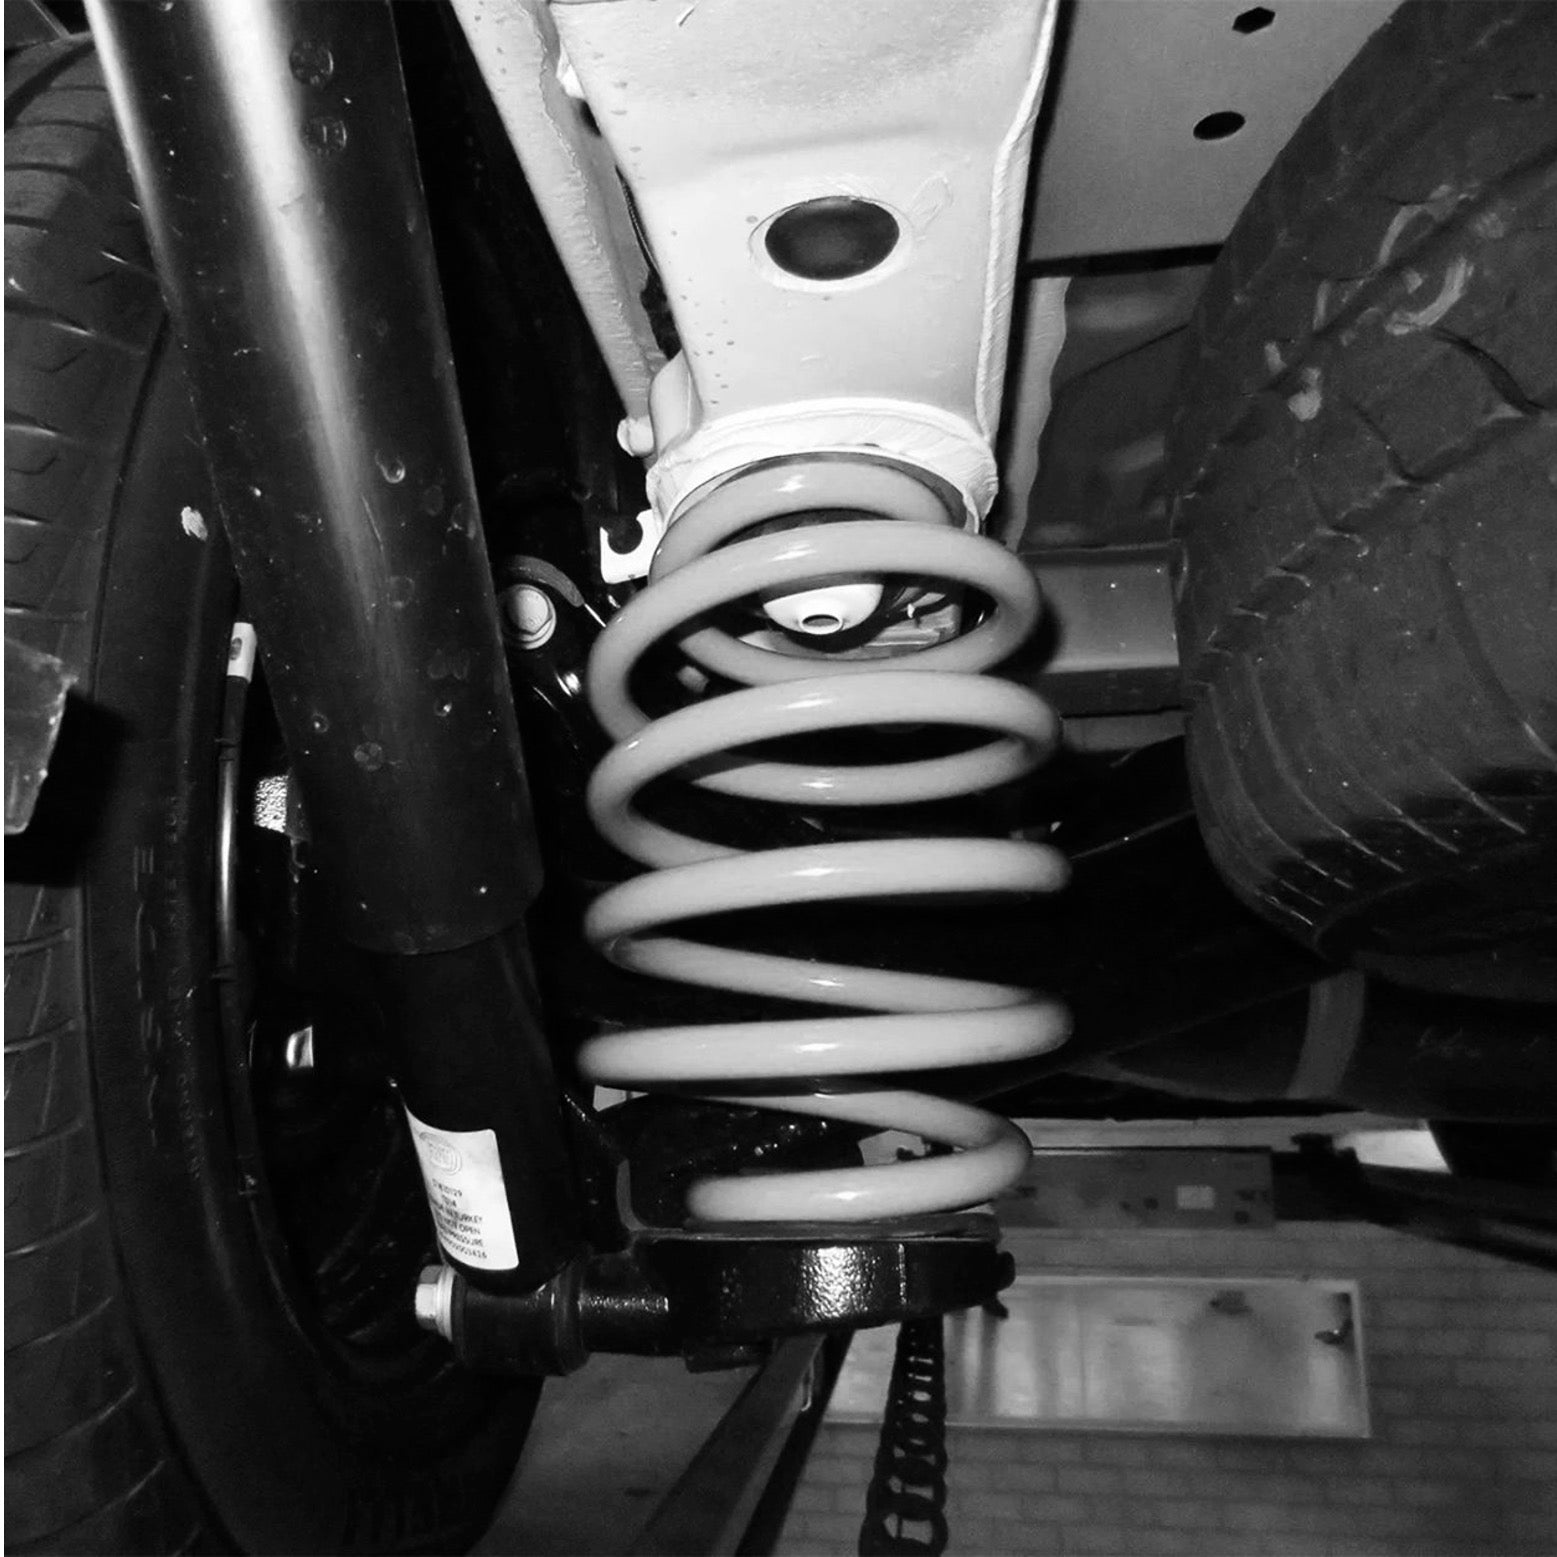 Rear axle (2001-): reinforced coil spring / RCSRETR01